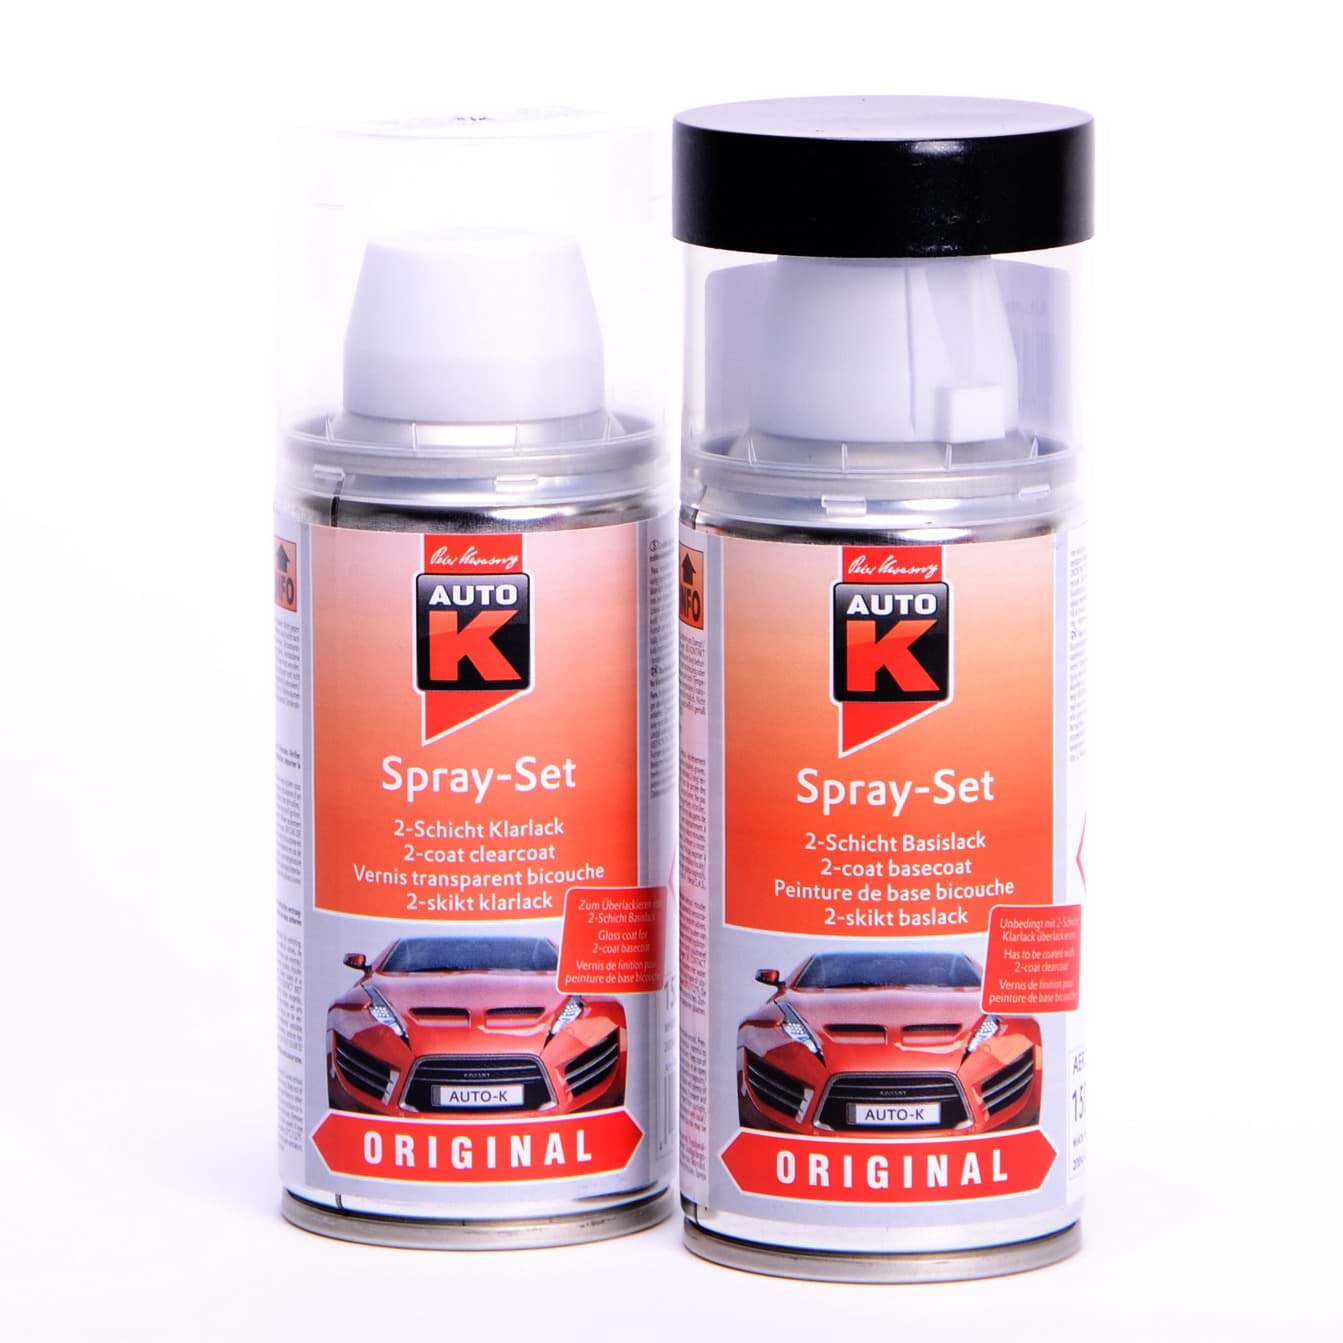 Auto-K Spray-Set Autolack für Opel 485 Ananasgelb 21417 resmi